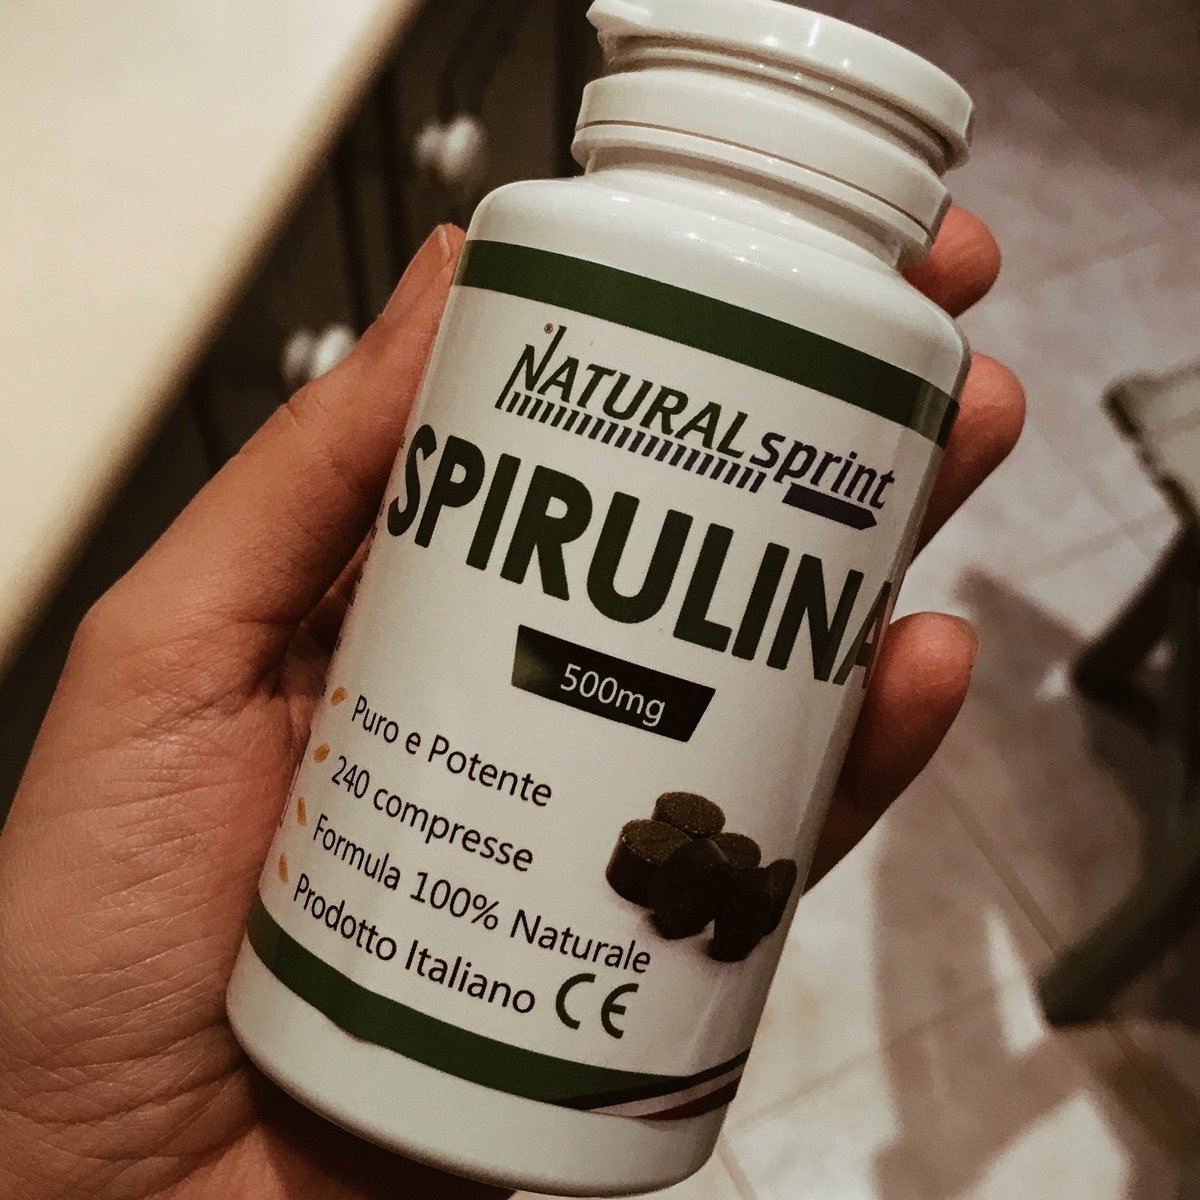 Natural Sprint Spirulina Reviews